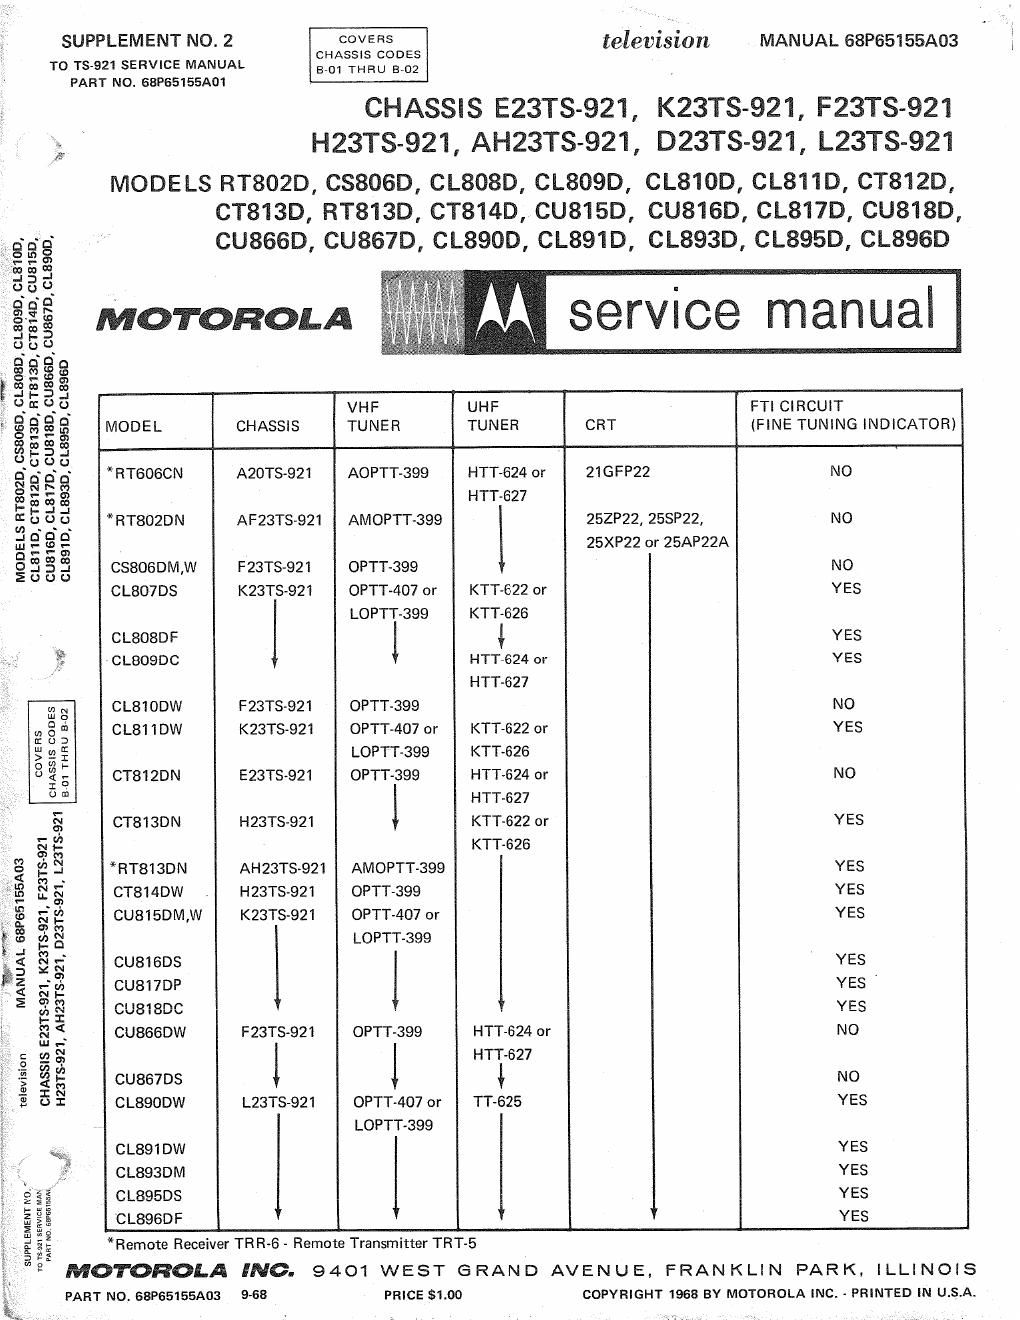 motorola cl 890 d service manual